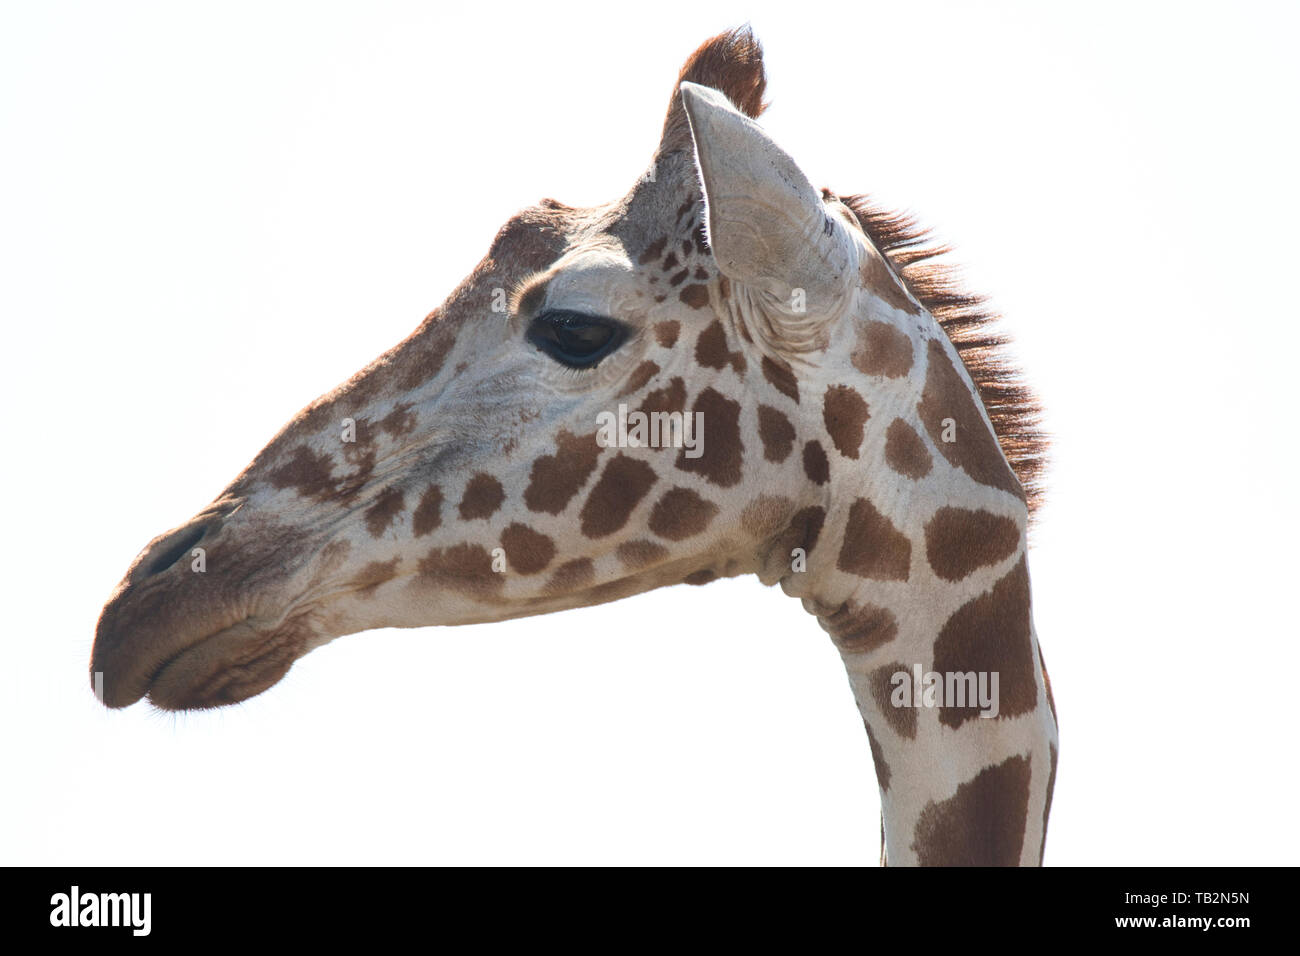 Reticulated giraffe (Giraffa camelopardalis reticulata) head against a white background Stock Photo